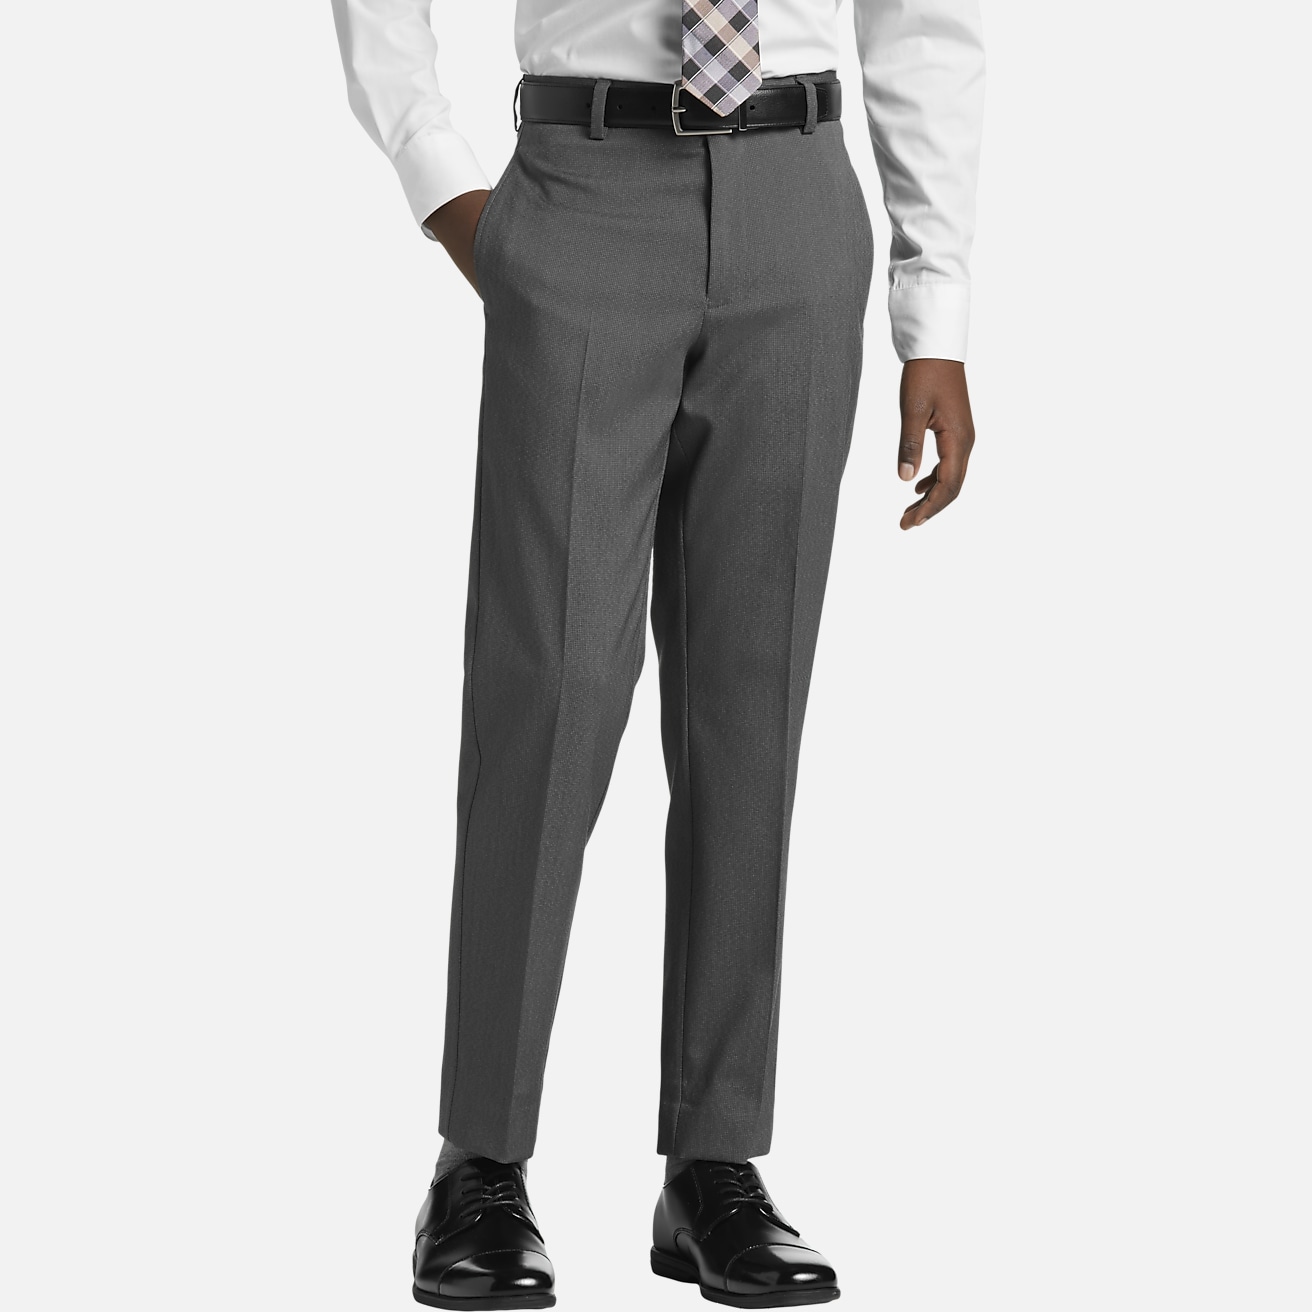 Boys Slim Fit Dress Pants Suit Slacks for Kids